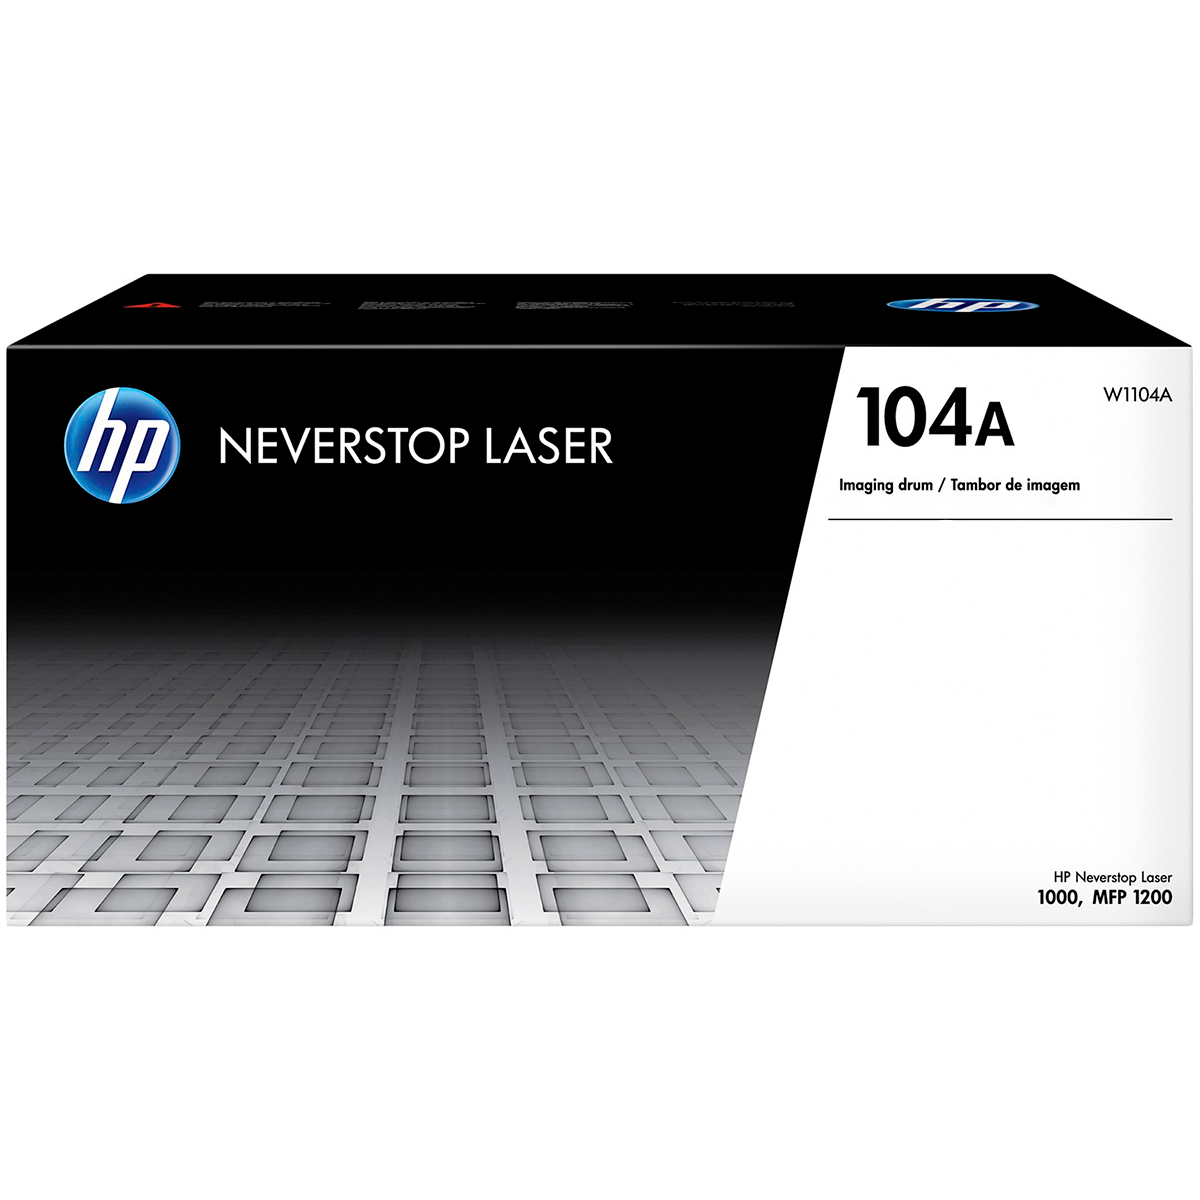 Tambor de Imagem HP 104A - W1104A - Para Neverstop Laser 1000, MFP 1200